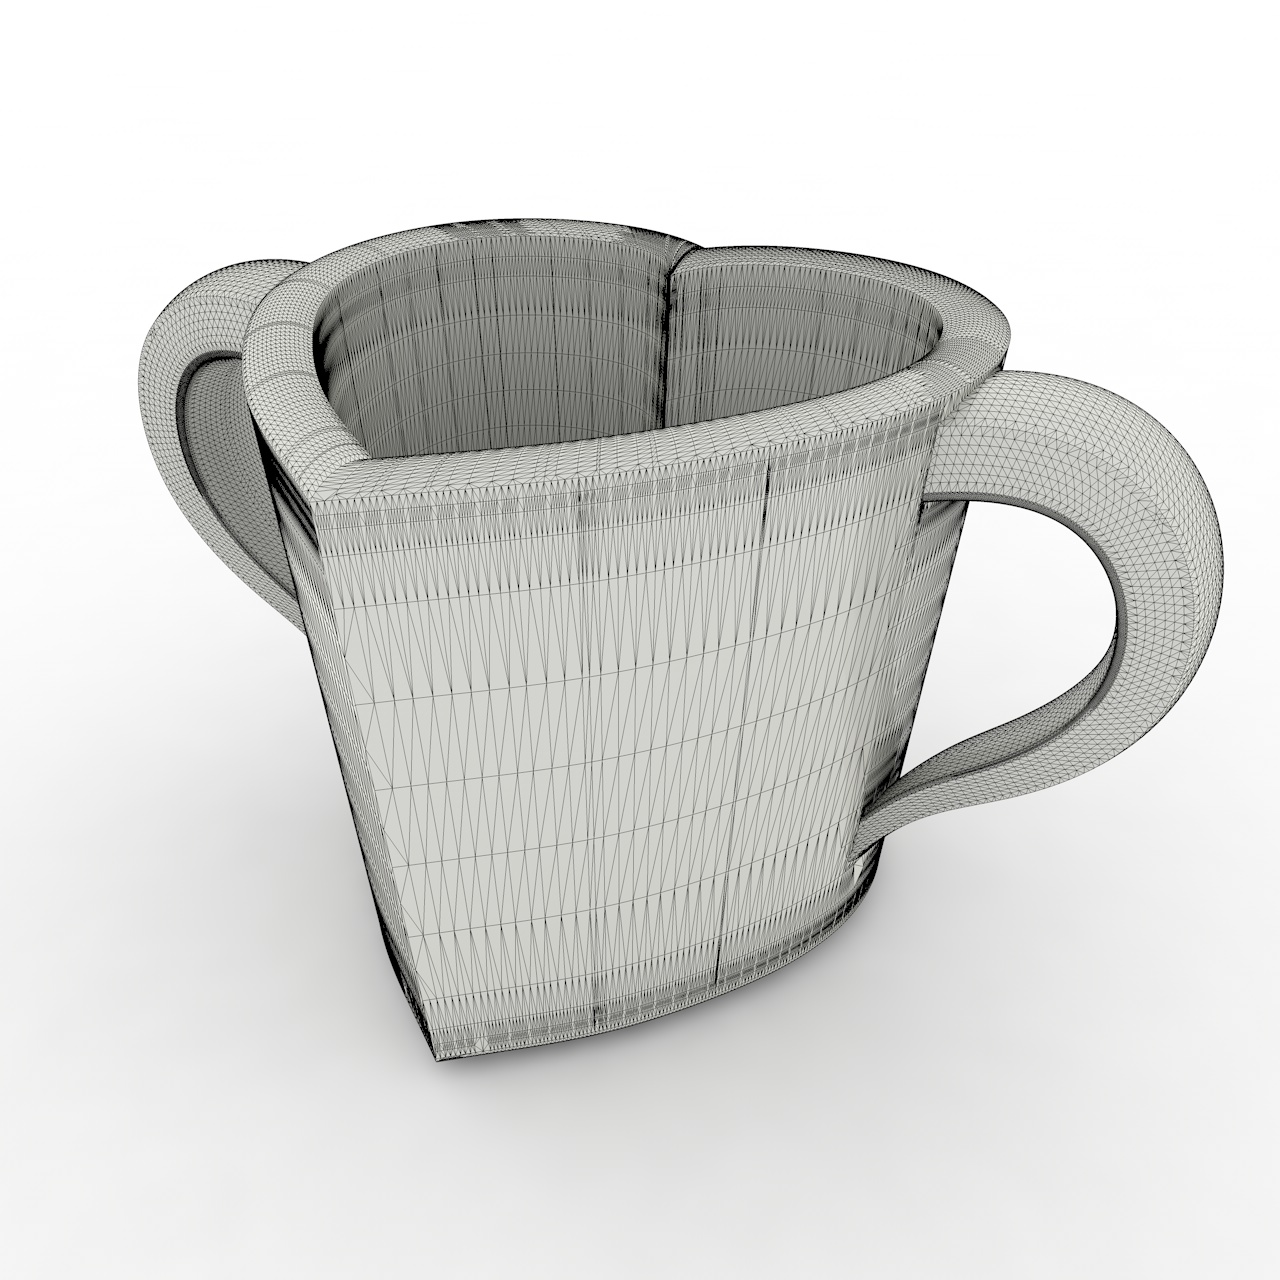 Love Heart Shape Cup model de imprimare 3d